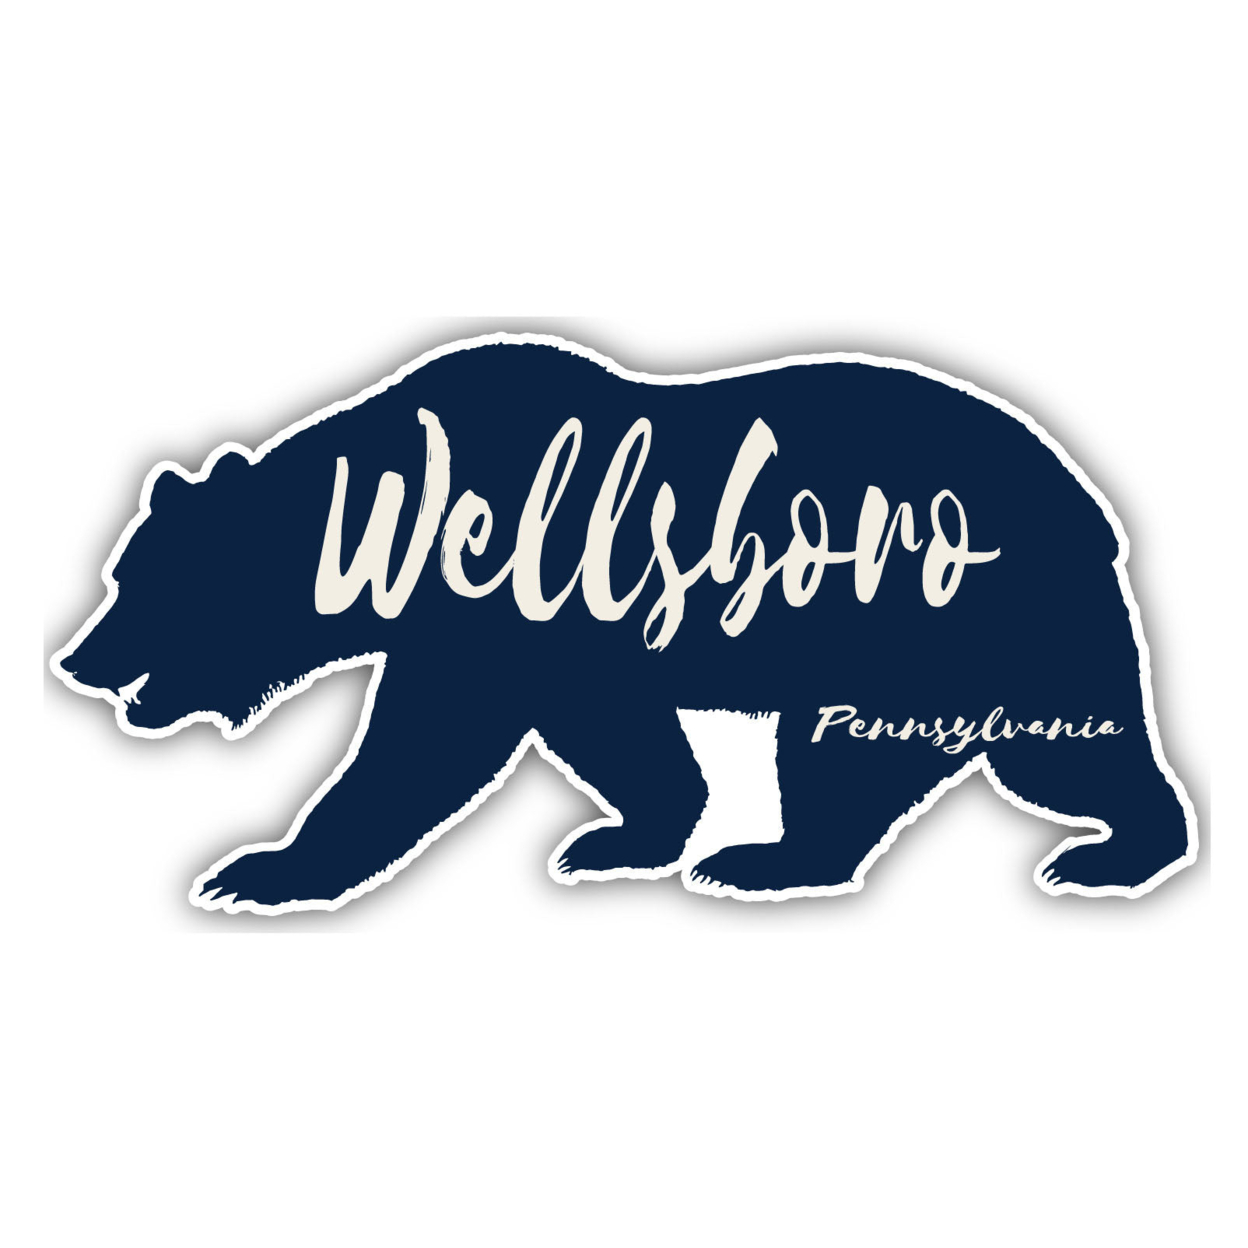 Wellsboro Pennsylvania Souvenir Decorative Stickers (Choose Theme And Size) - Single Unit, 2-Inch, Bear